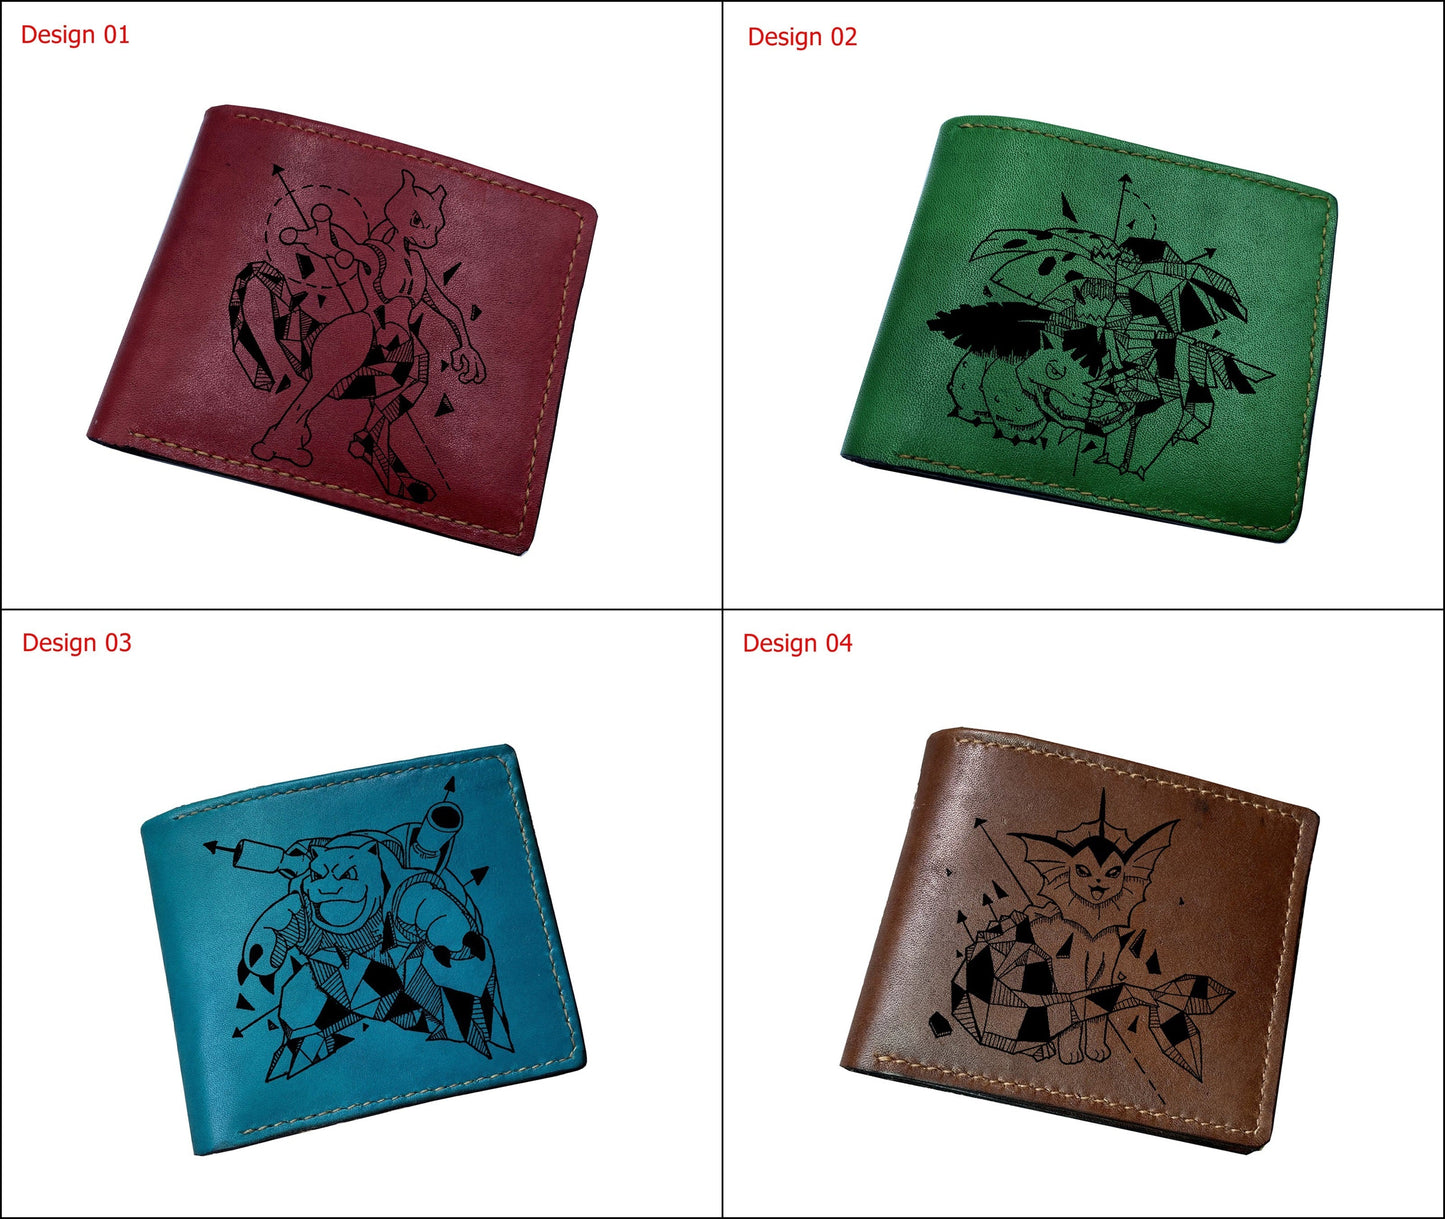 Mayan Corner - Pokemon geometric art leather handmade wallet, leather gift for dad, husband, brother - Gengar ghost pokemon